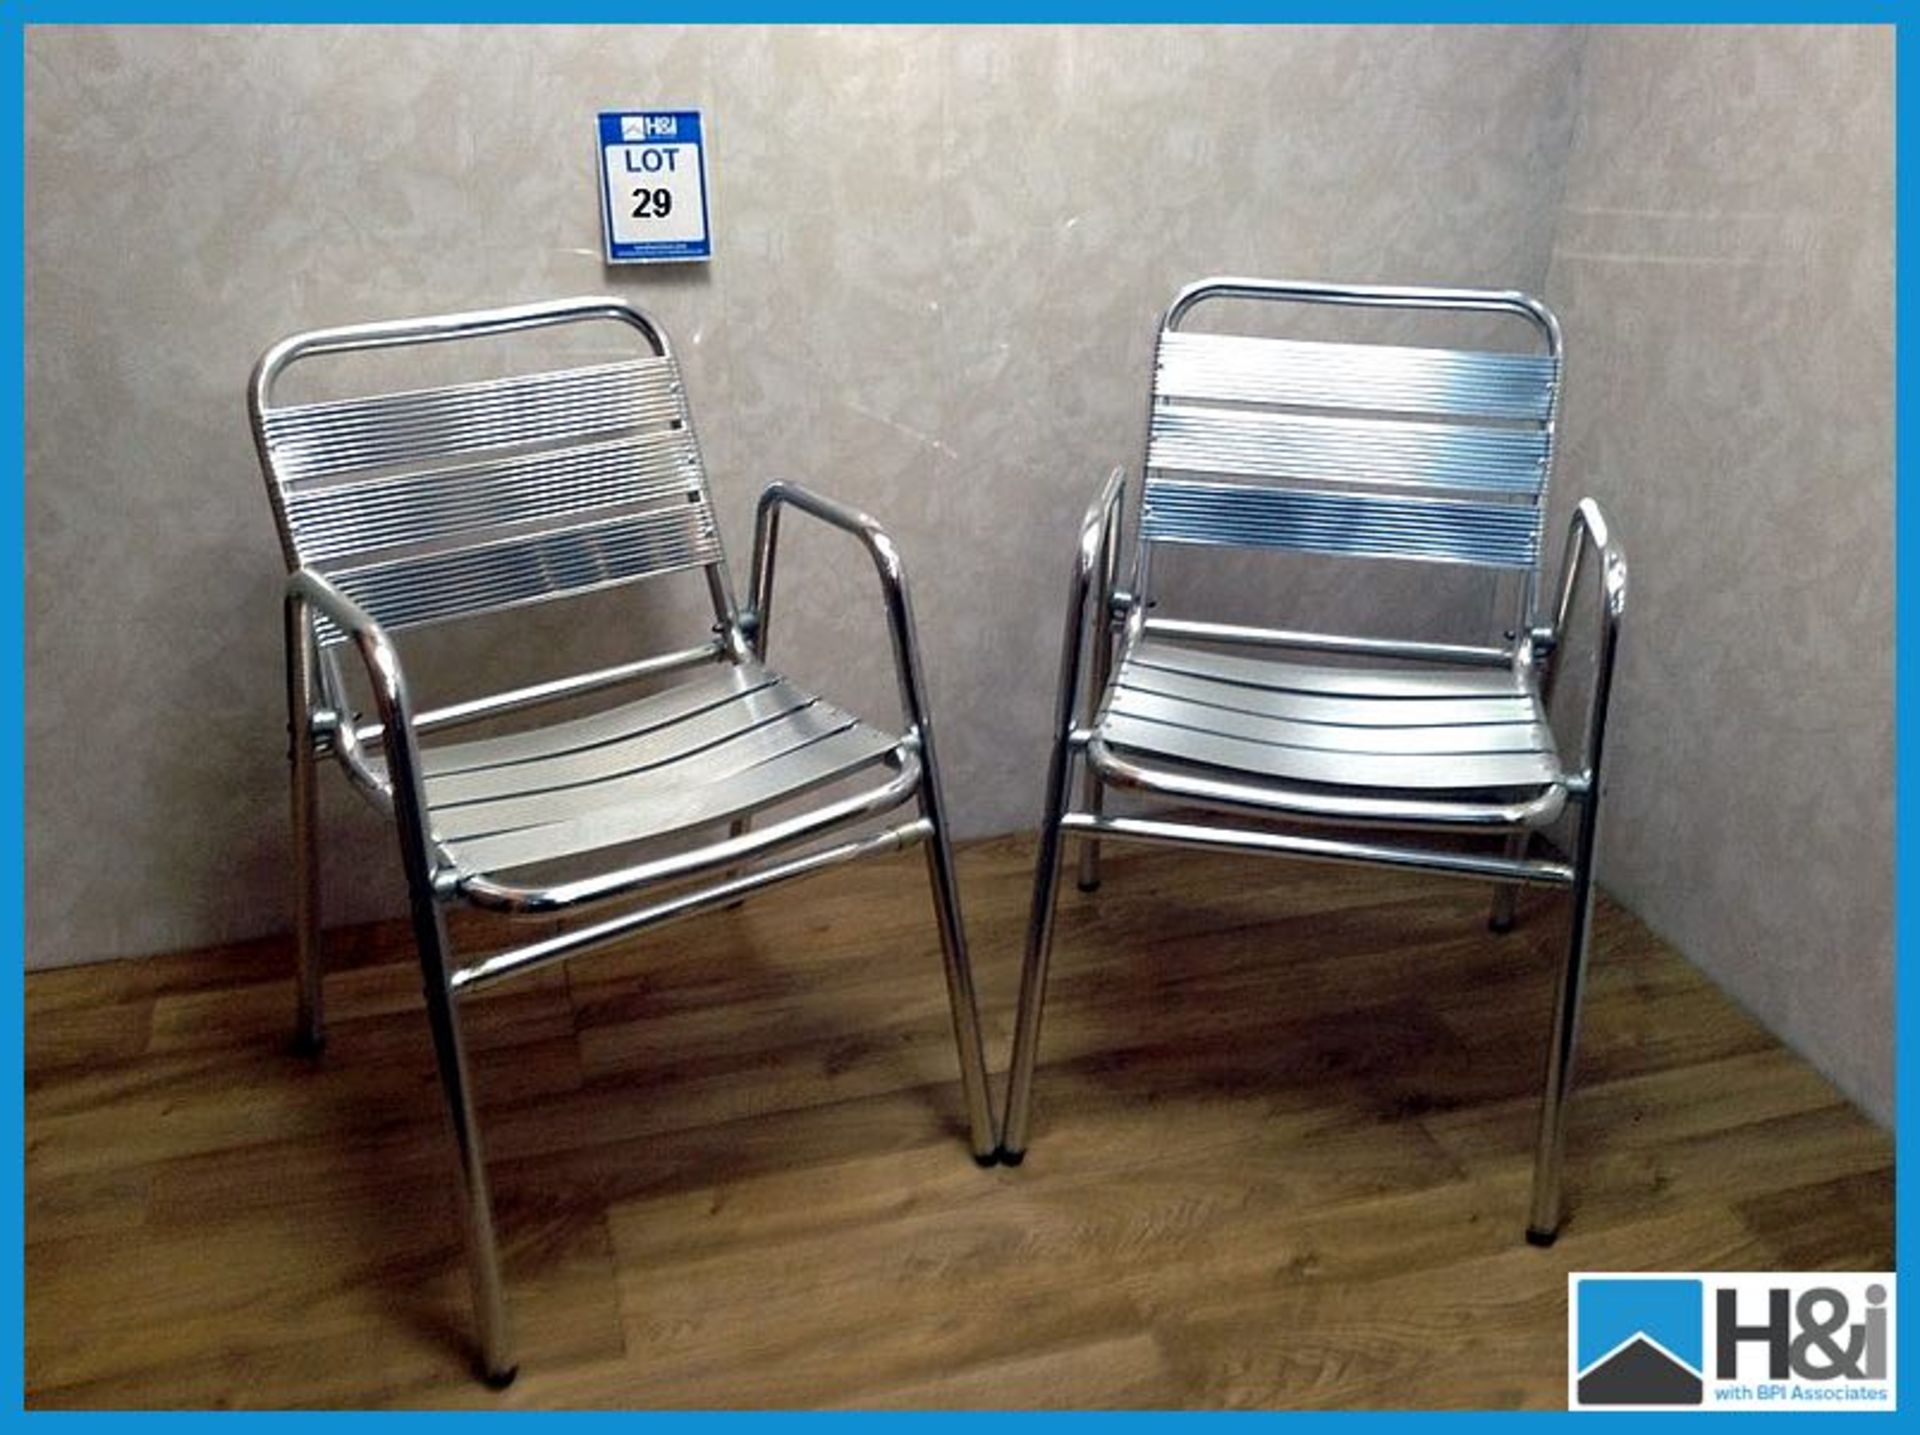 2 x Silver Bistro chairs - 17 Appraisal: Good Serial No: NA Location: Identihire, Unit 1, Church